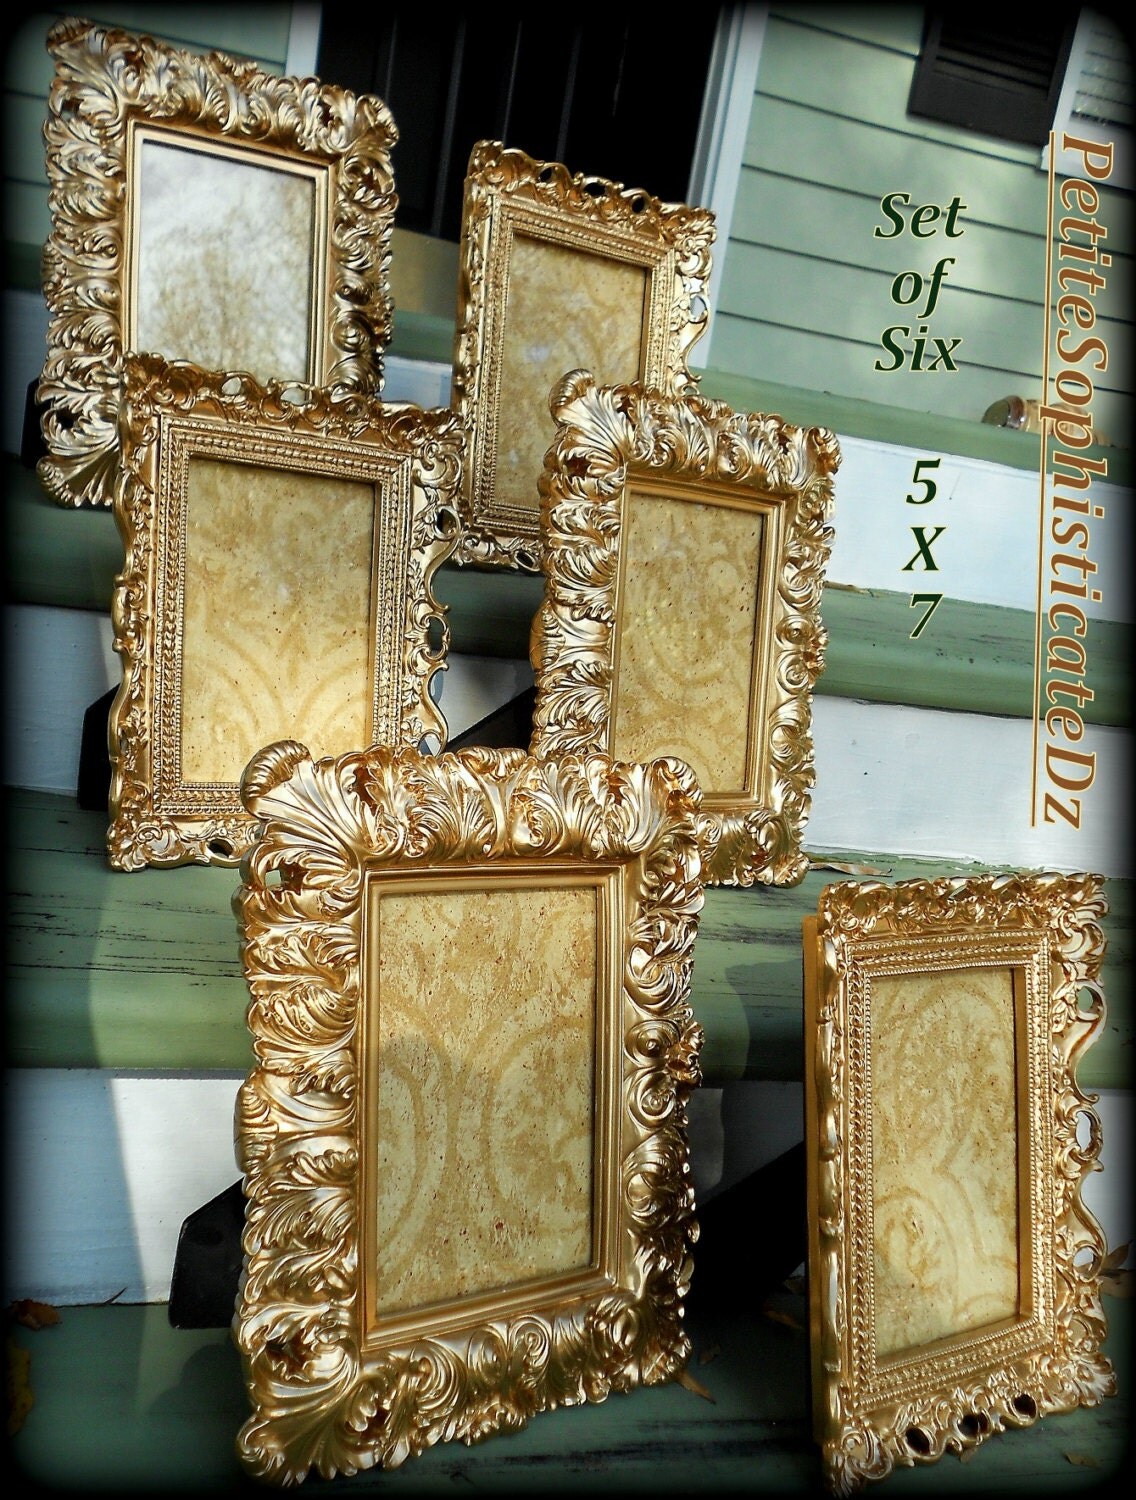 6 Antique Gold French/Baroque Wedding Decor-"Mix & Match" -5x7 Frames,Formal Reception,Nursery,Paris Gold,Vintage Party Decor,Rococo,Glam